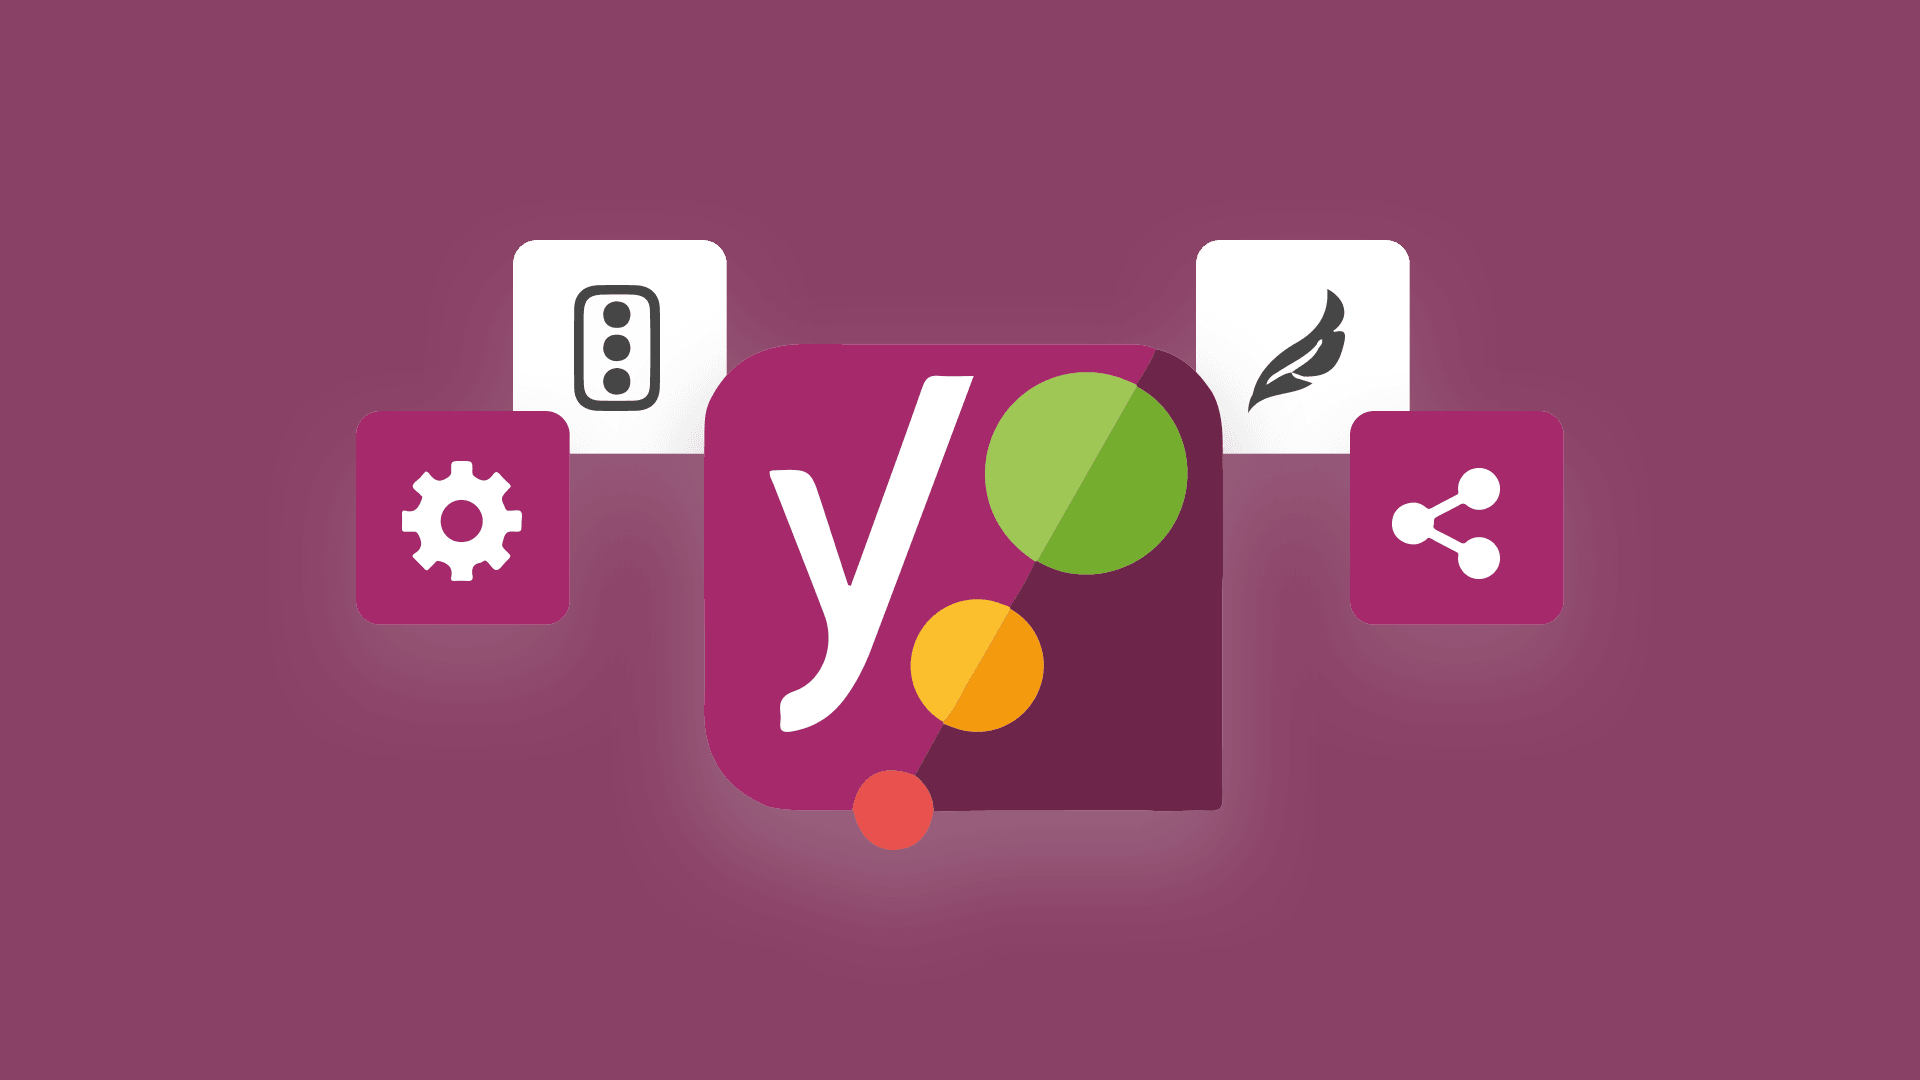 Download Yoast SEO WordPress Plugin Free Version